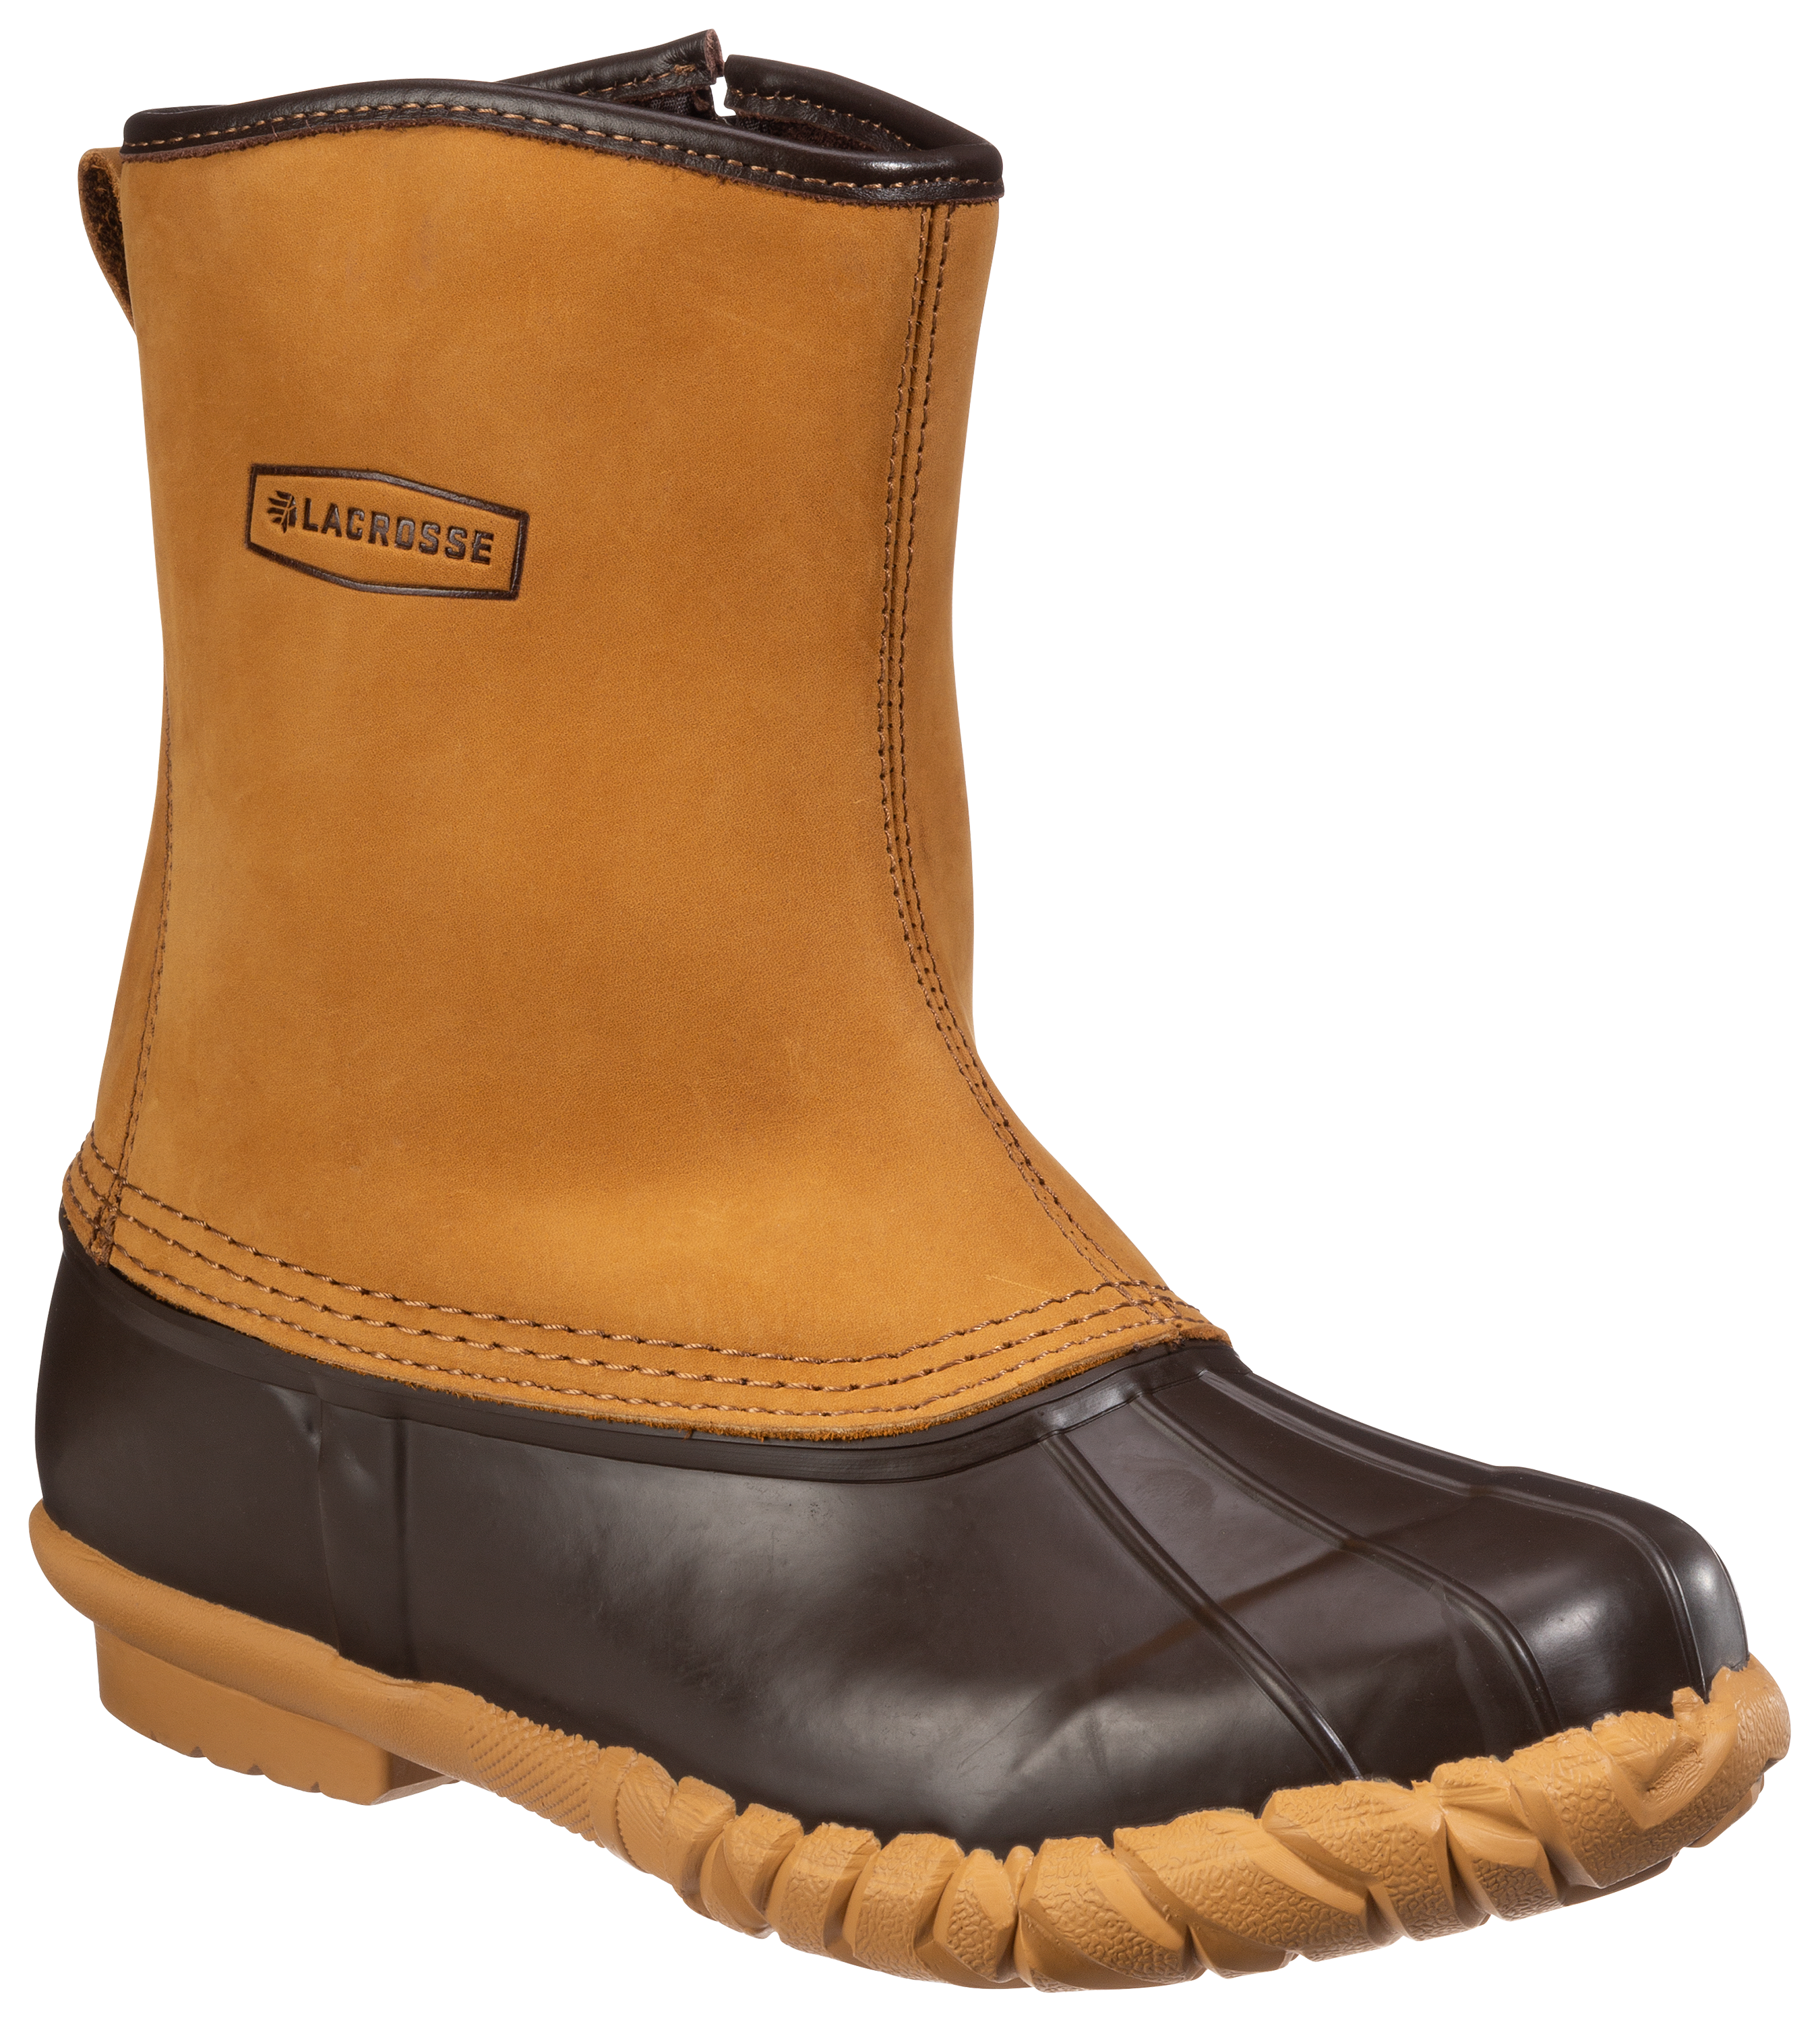 LaCrosse Mesquite II Insulated Waterproof Side-Zip Boots for Men - Brown - 9M